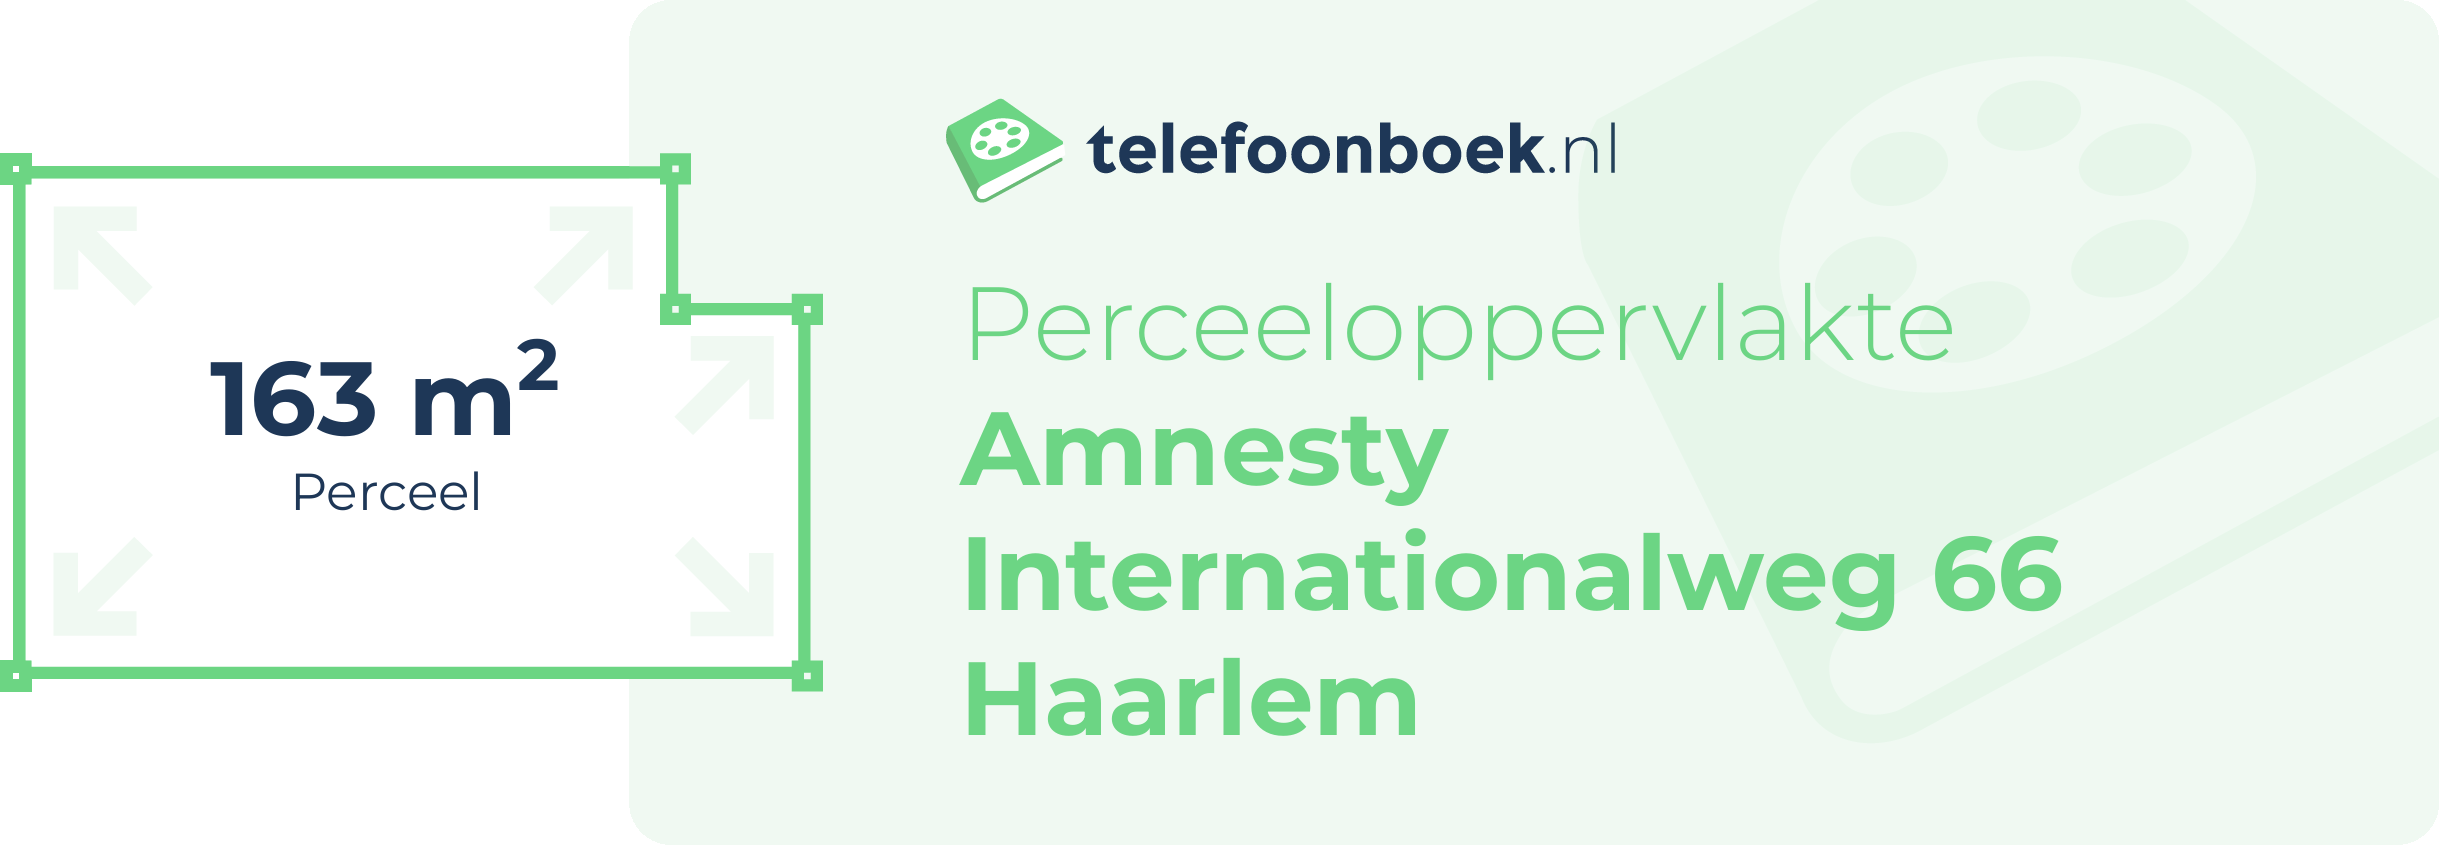 Perceeloppervlakte Amnesty Internationalweg 66 Haarlem